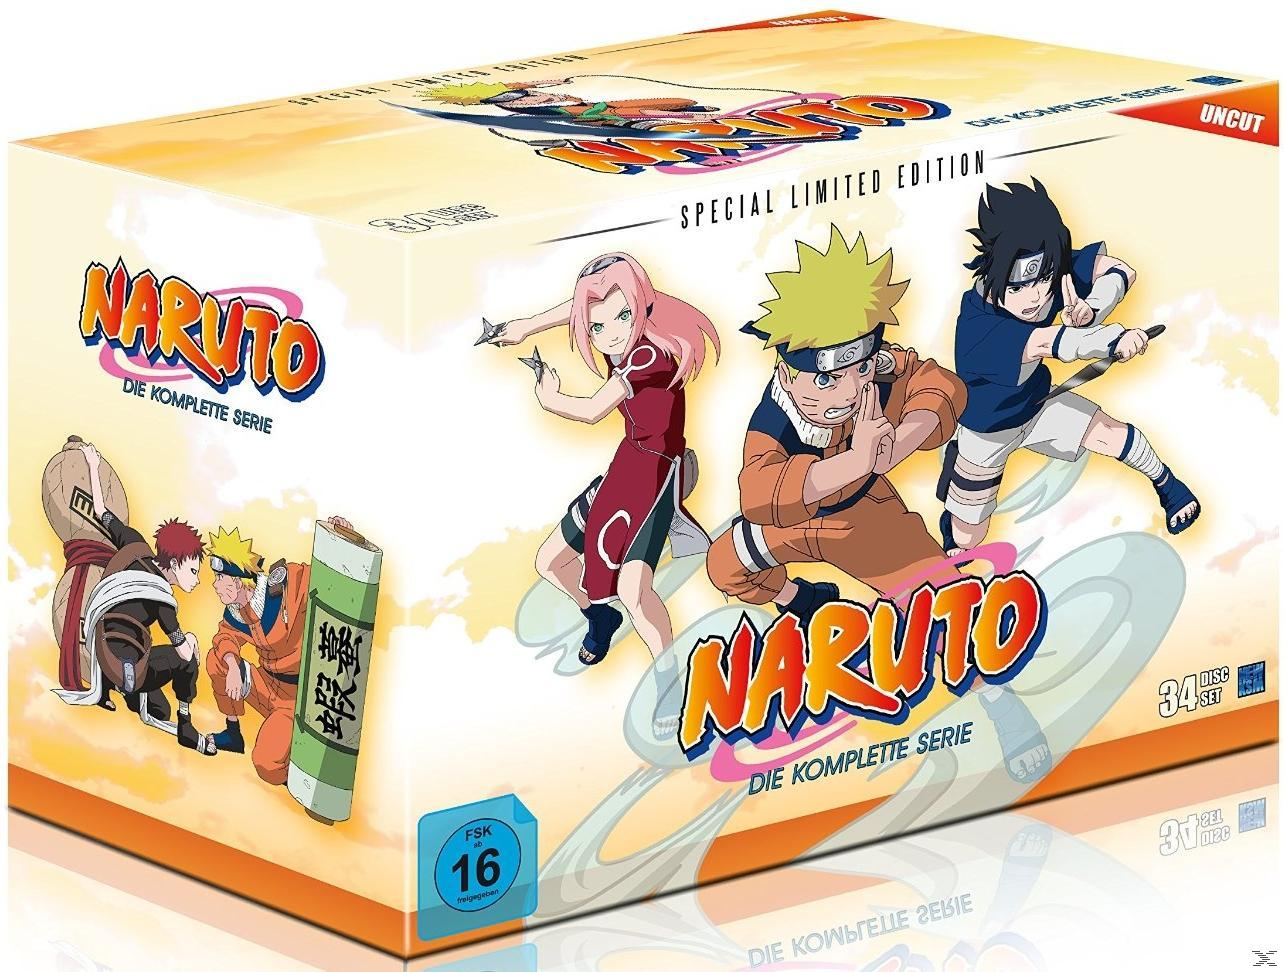 - DVD (Gesamtedition) Edition Naruto Limited Special